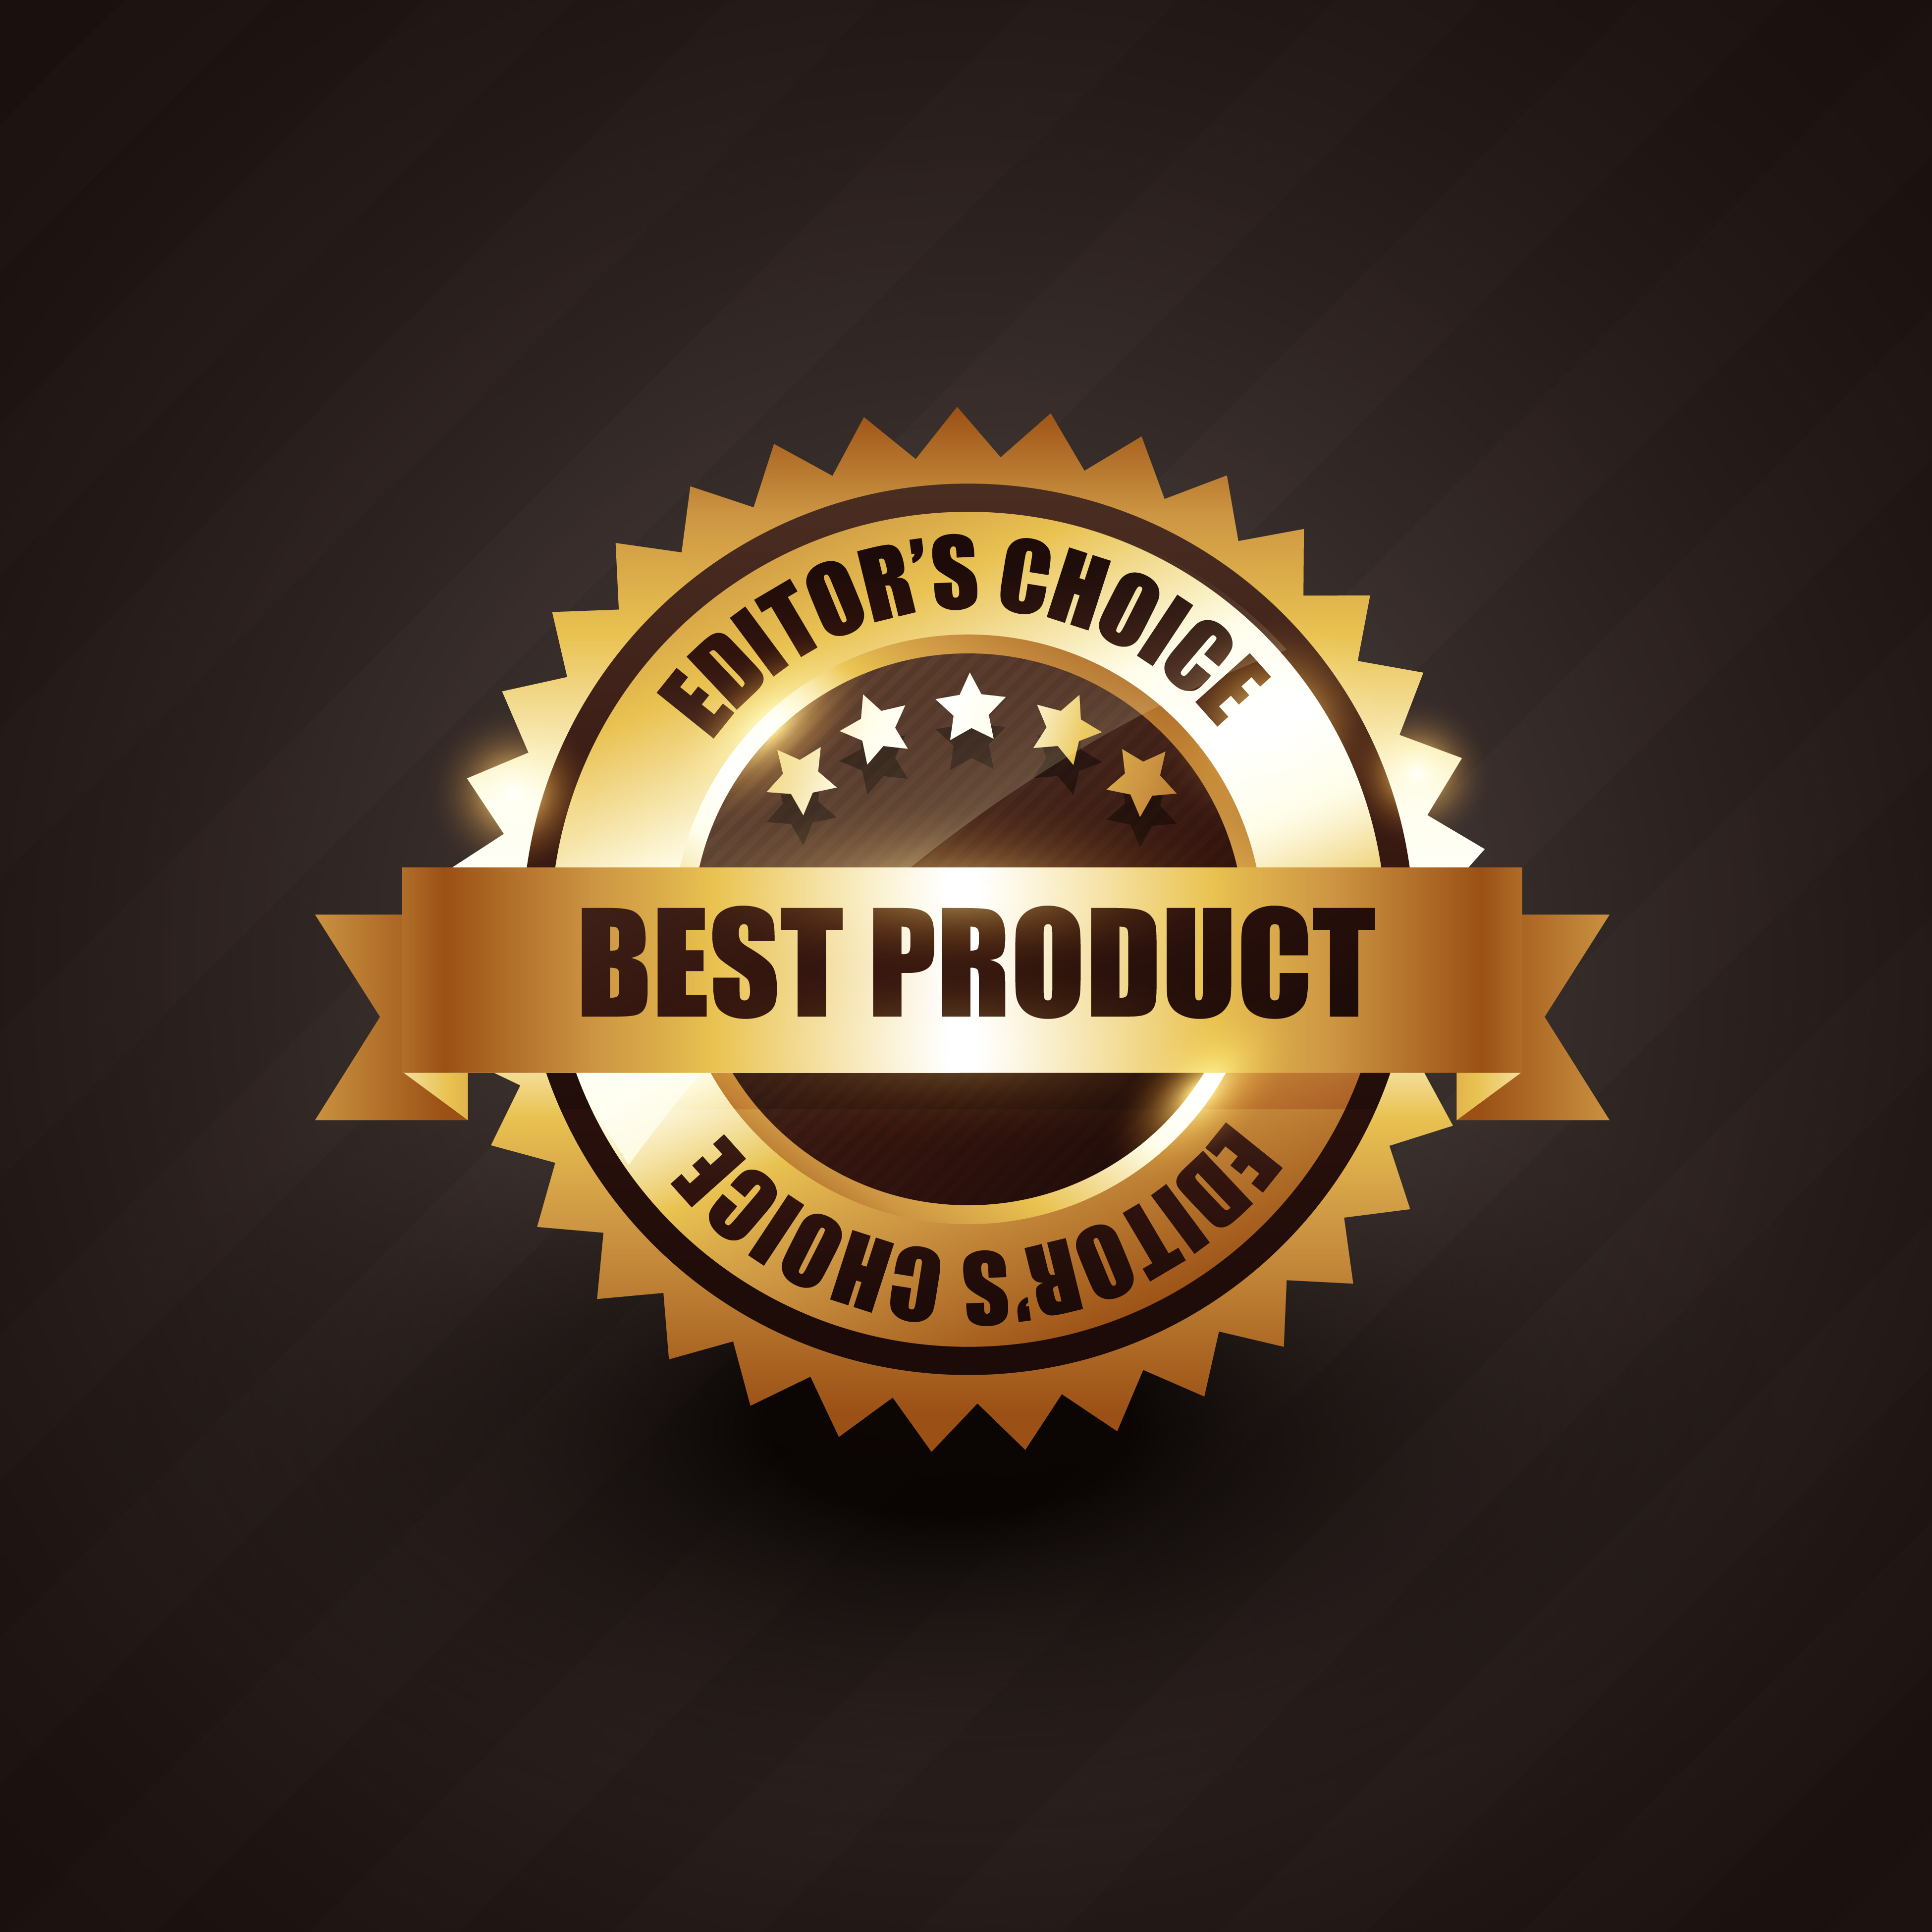 best product golden label badge vector design 221564 - Download Free